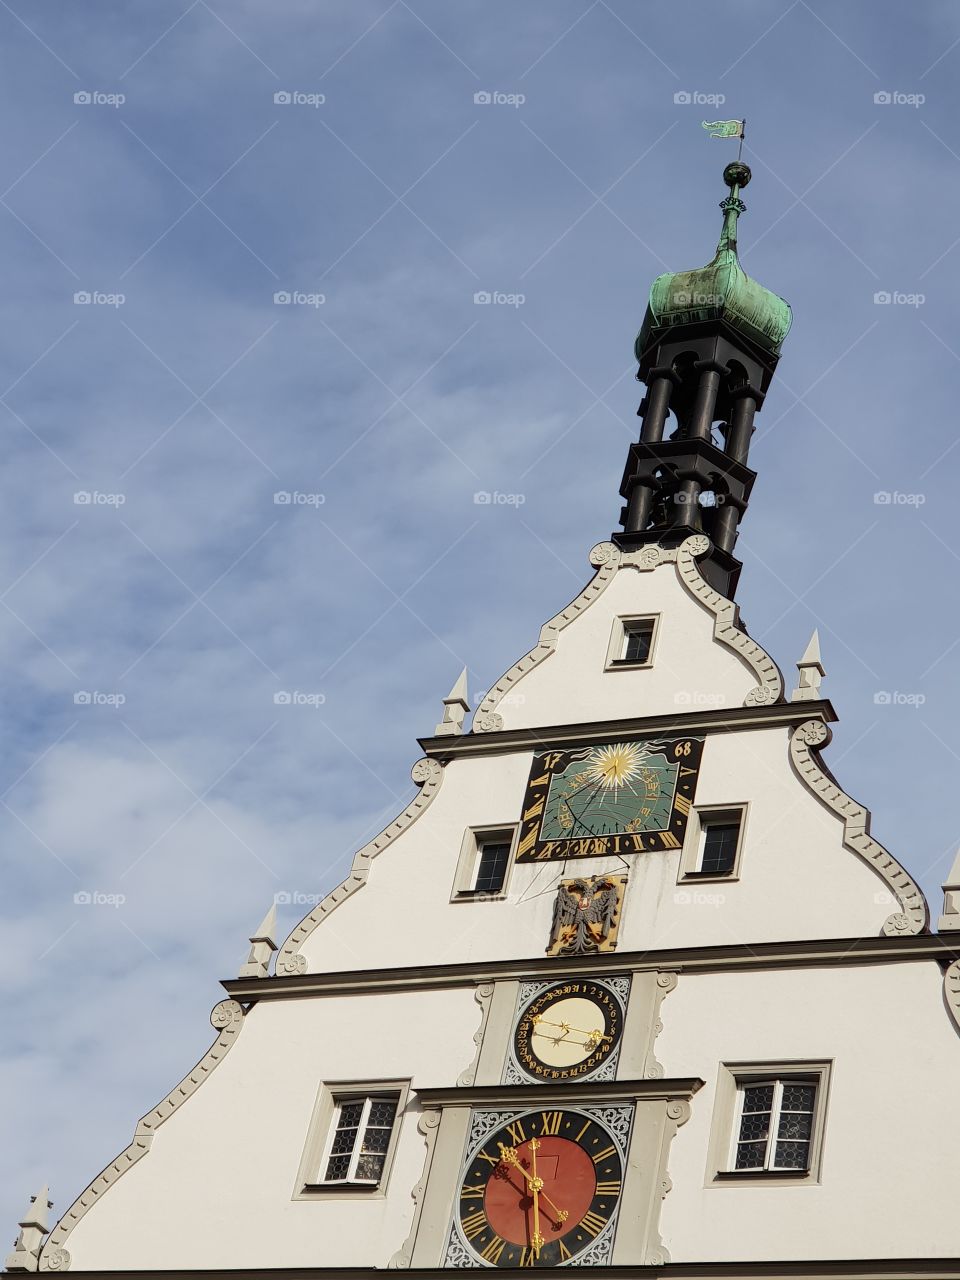 Rothenburg ob der Tauber sundial - clock